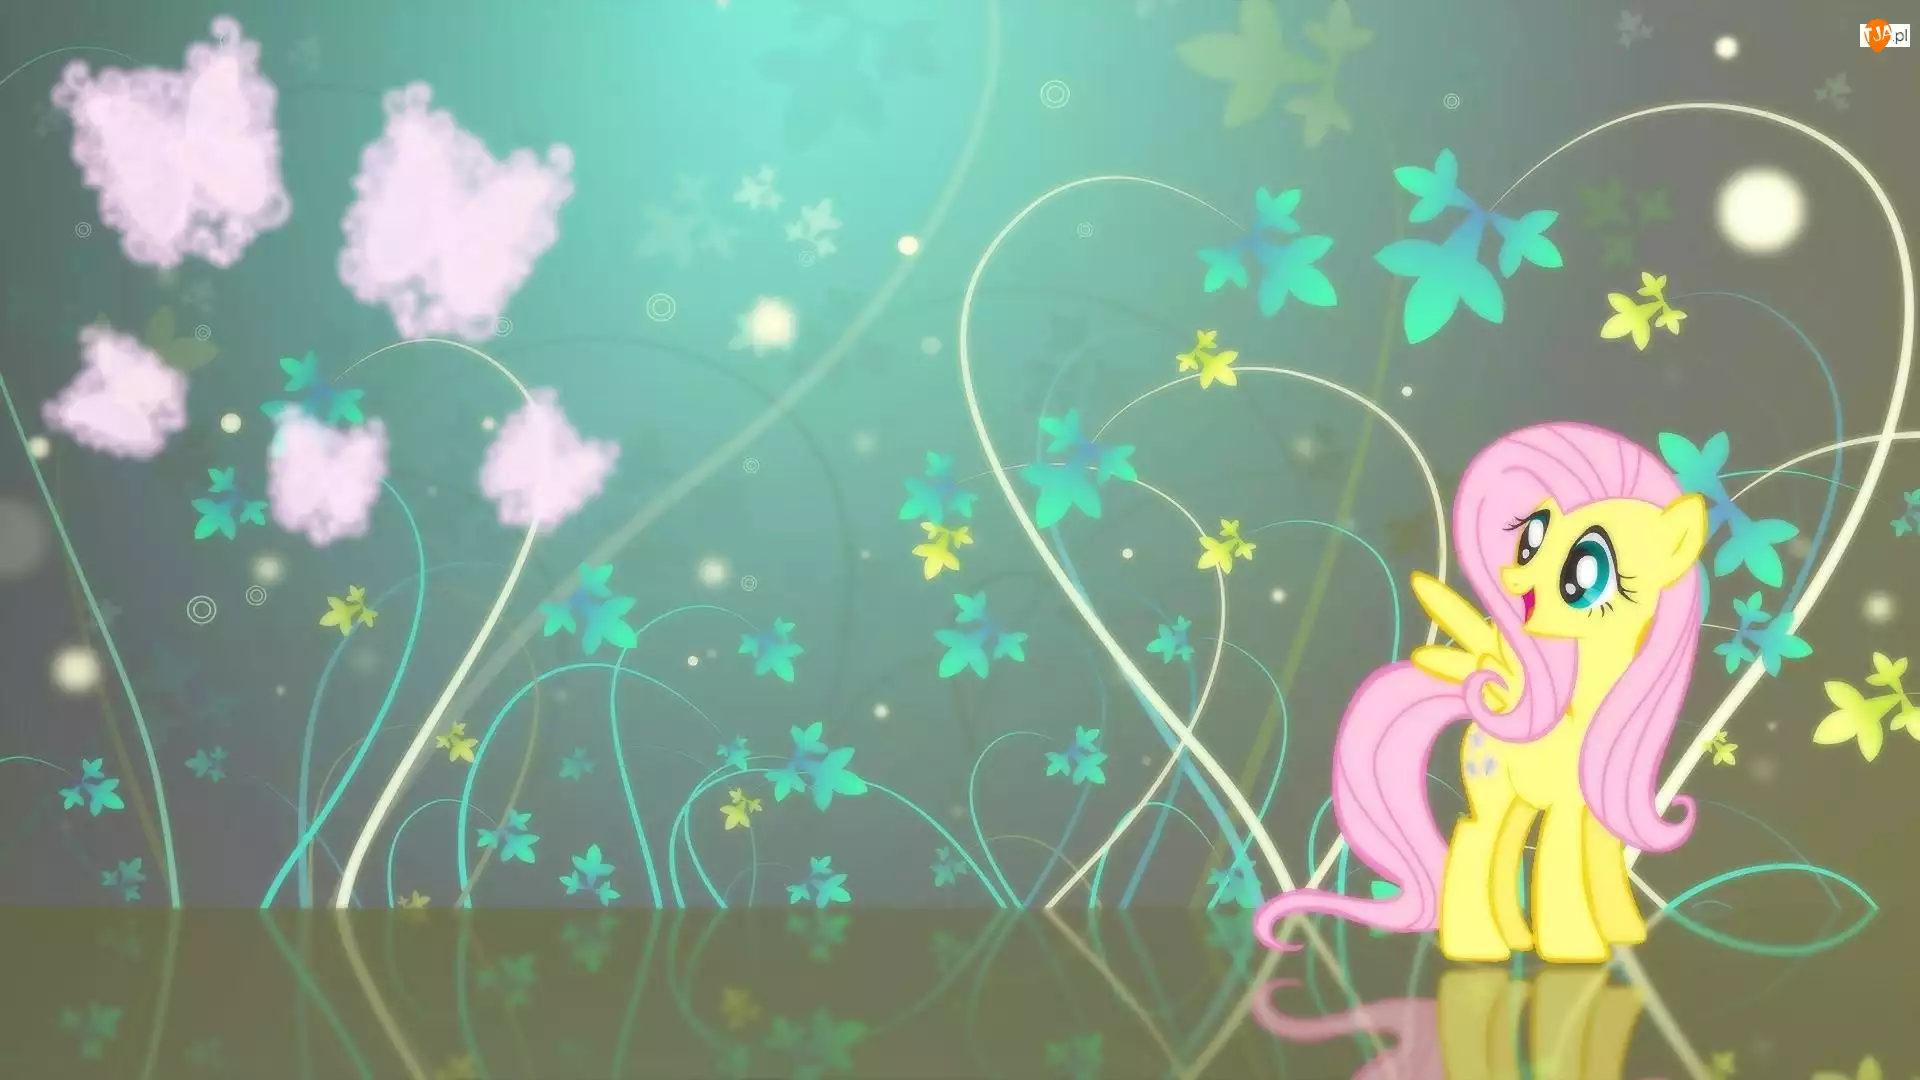 Fluttershy, My Little Pony